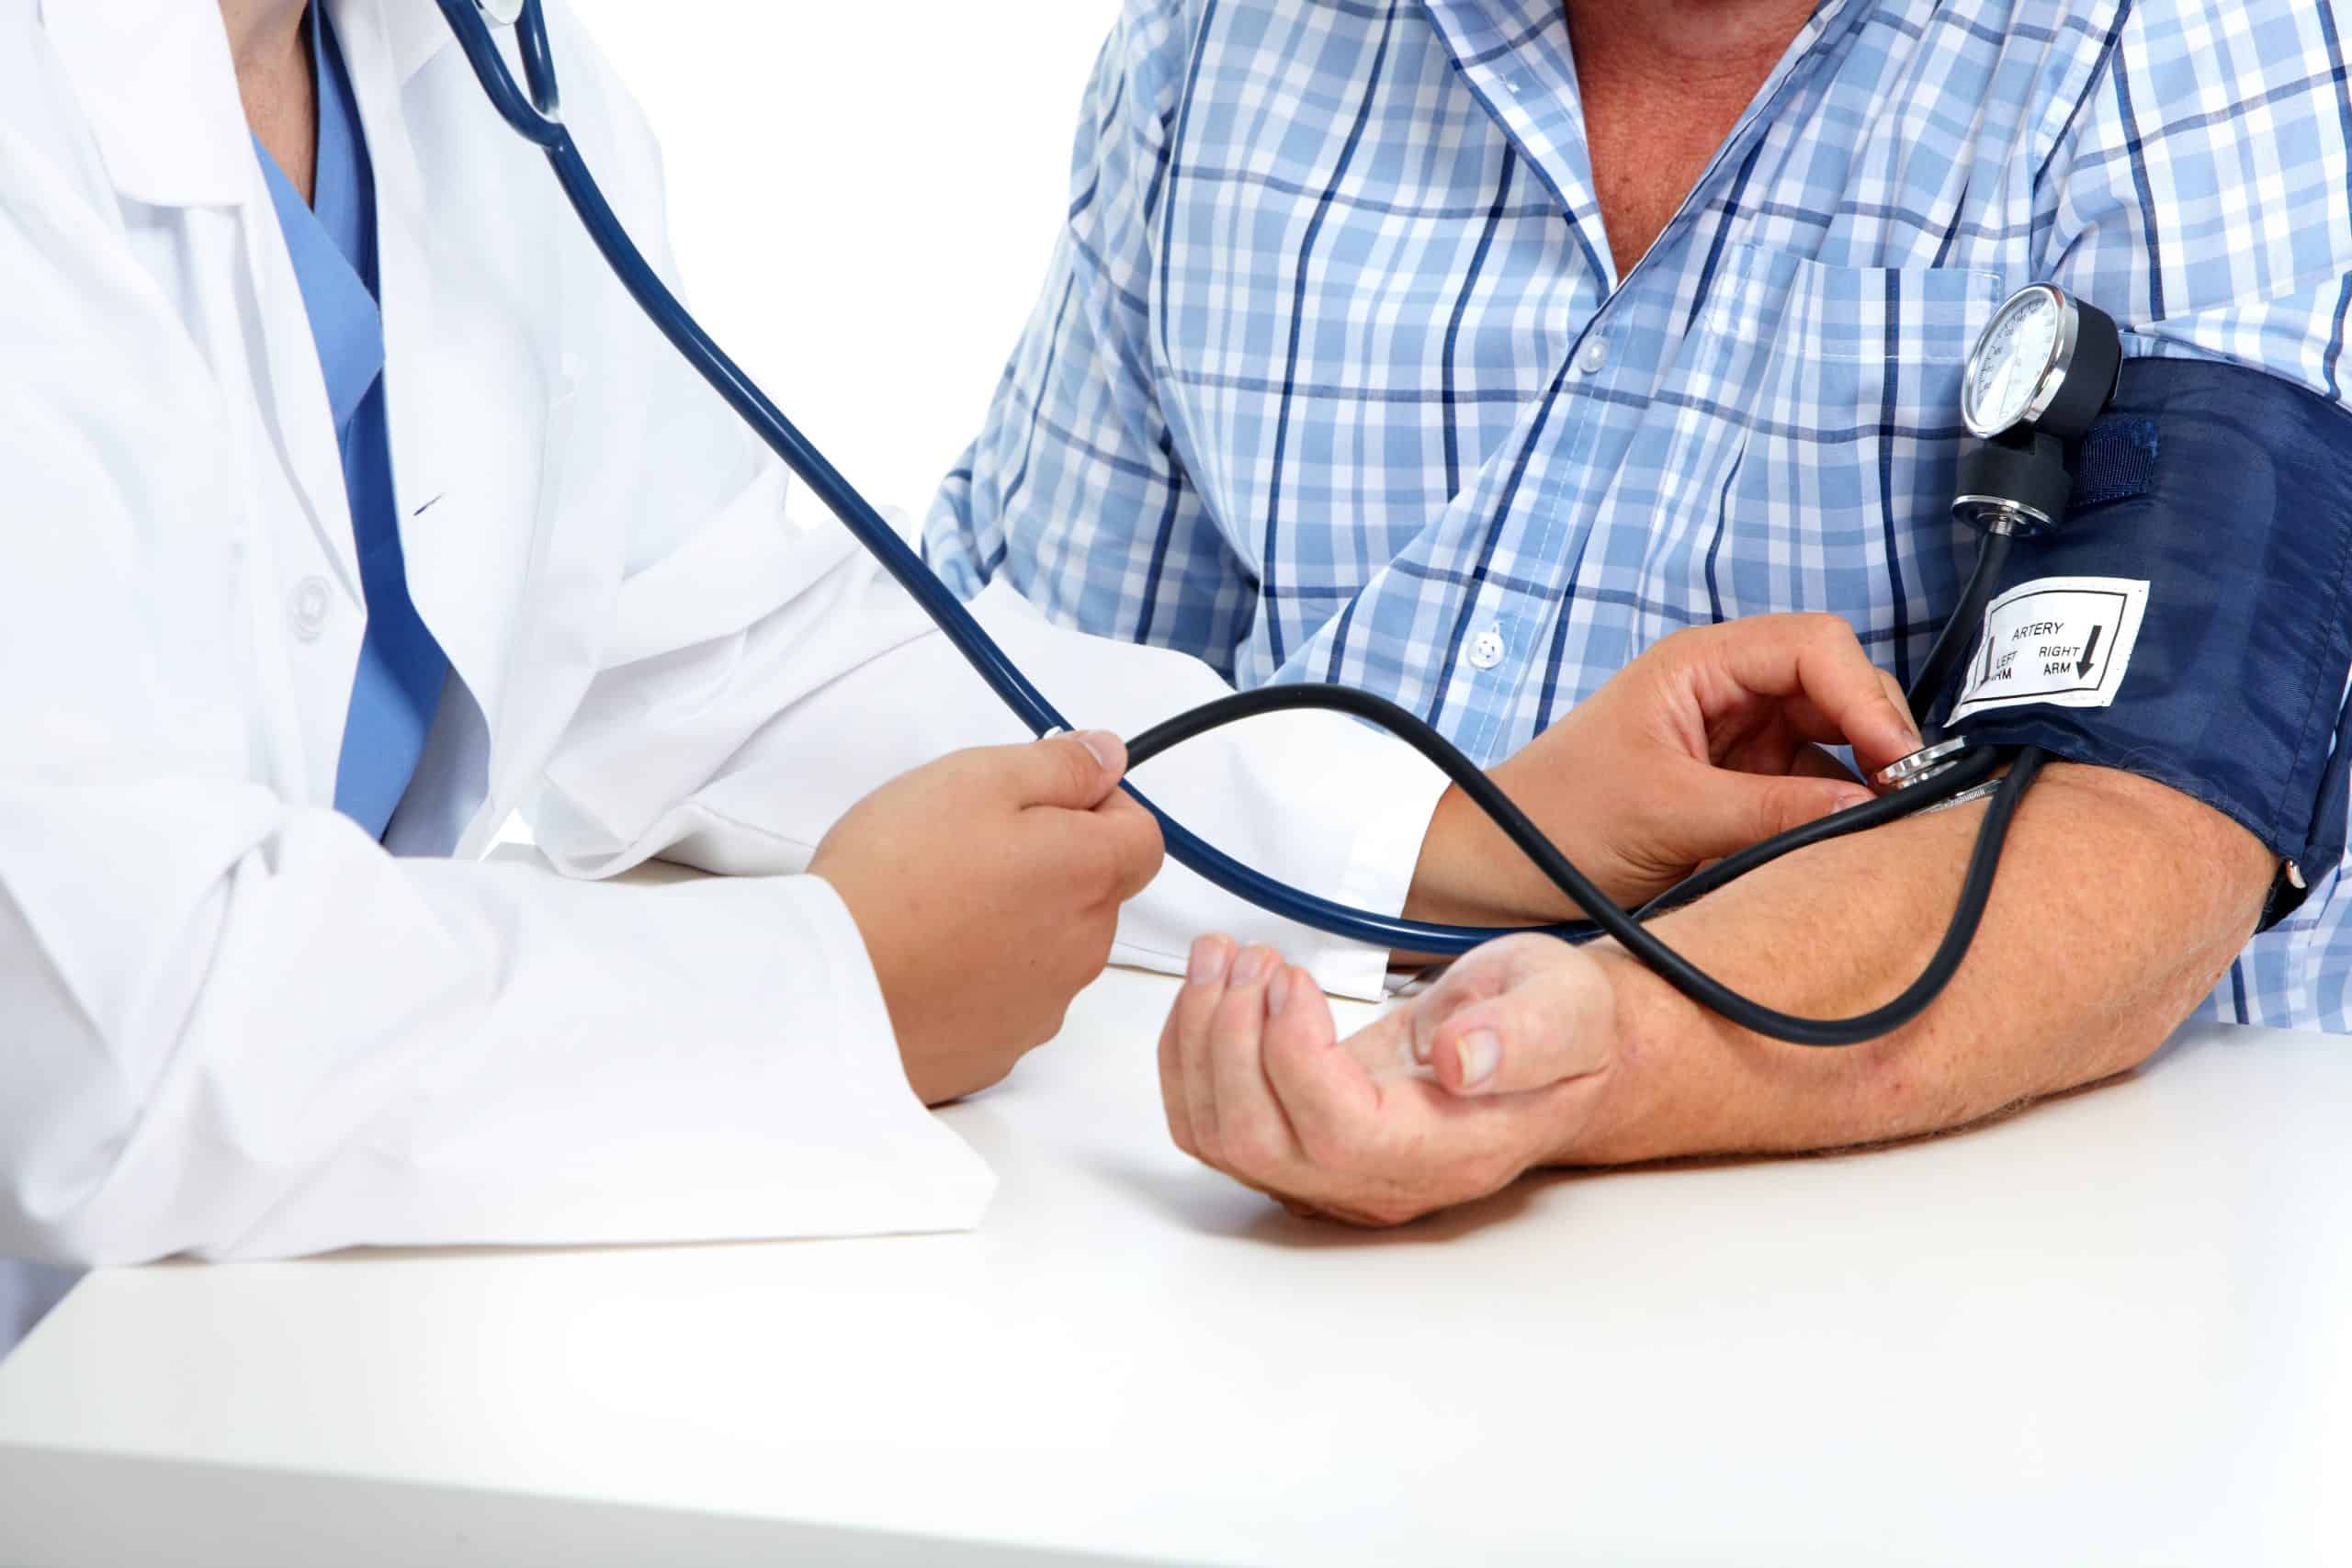 hipertenzija kriza predavanje akutna hipertenzija